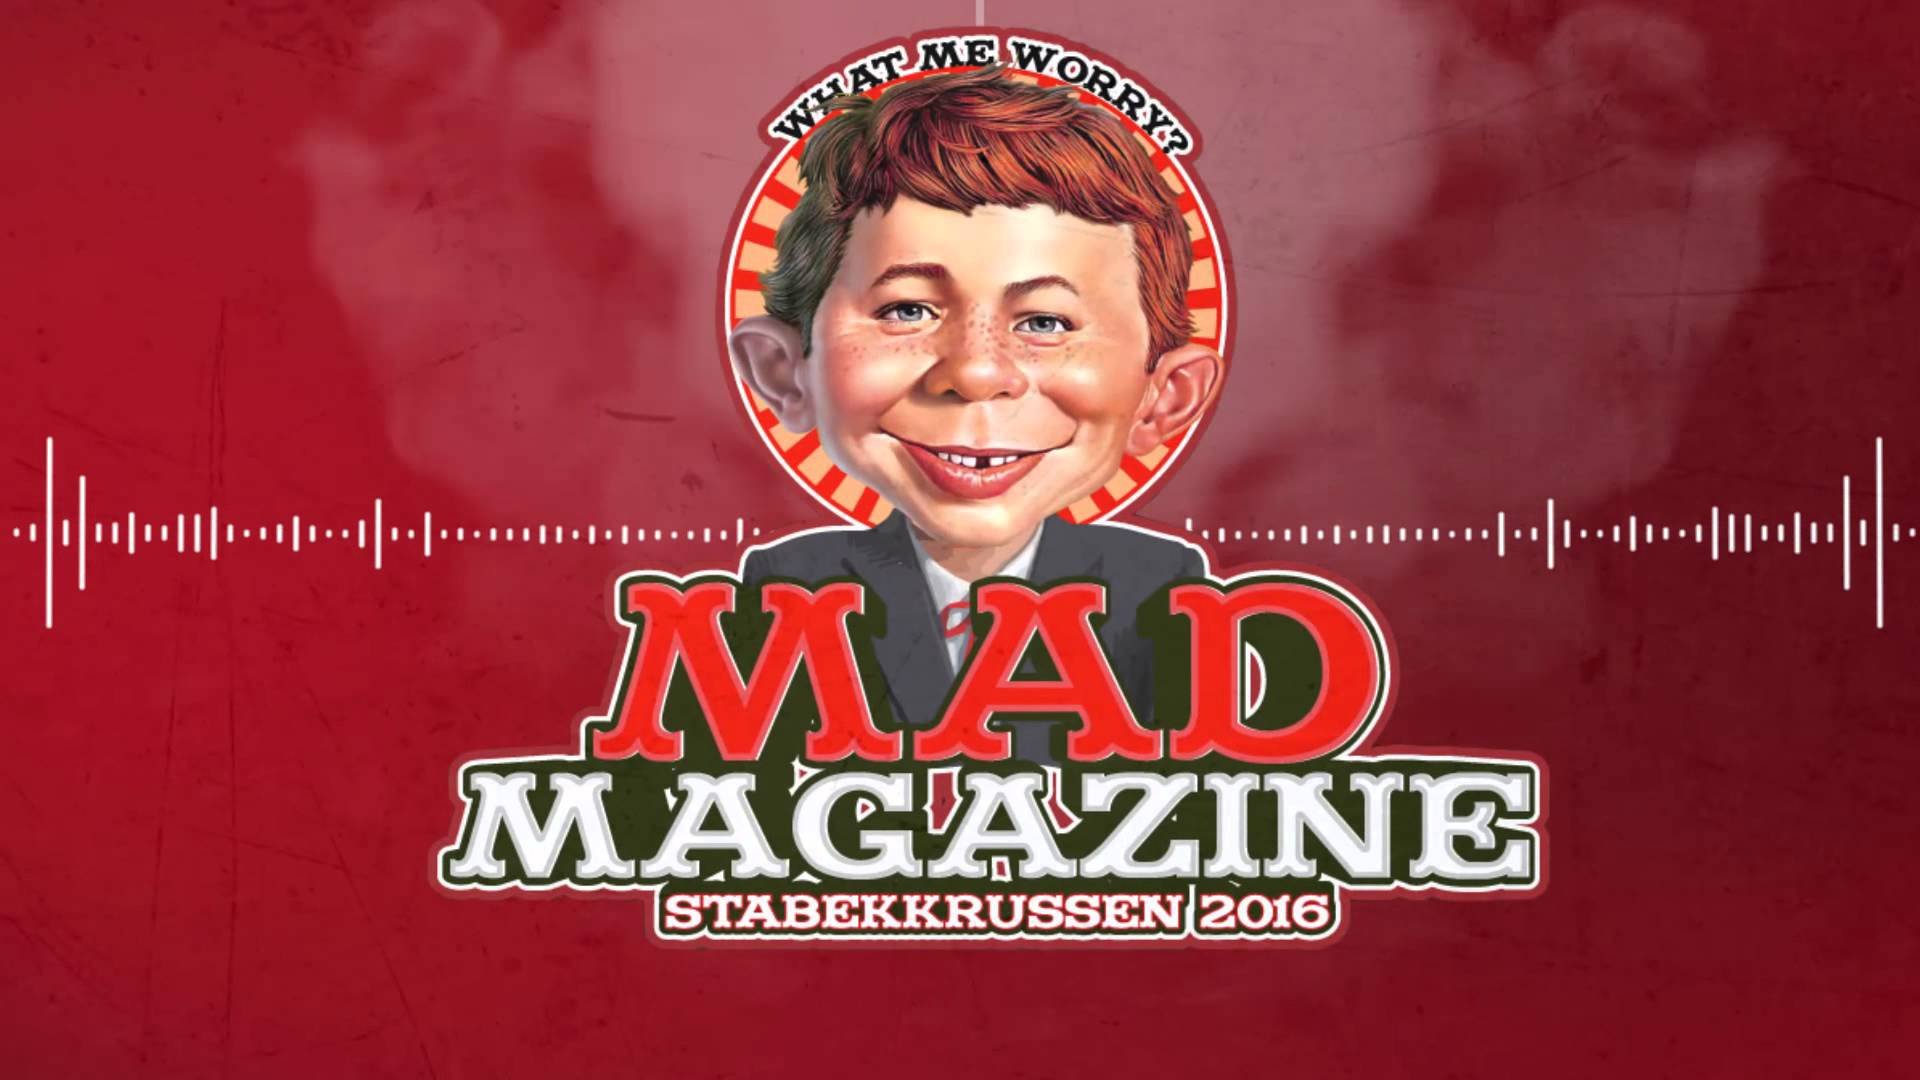 mad, Magazine, Sadic, Comics, Humor, Funny, Comics, Poster Wallpaper